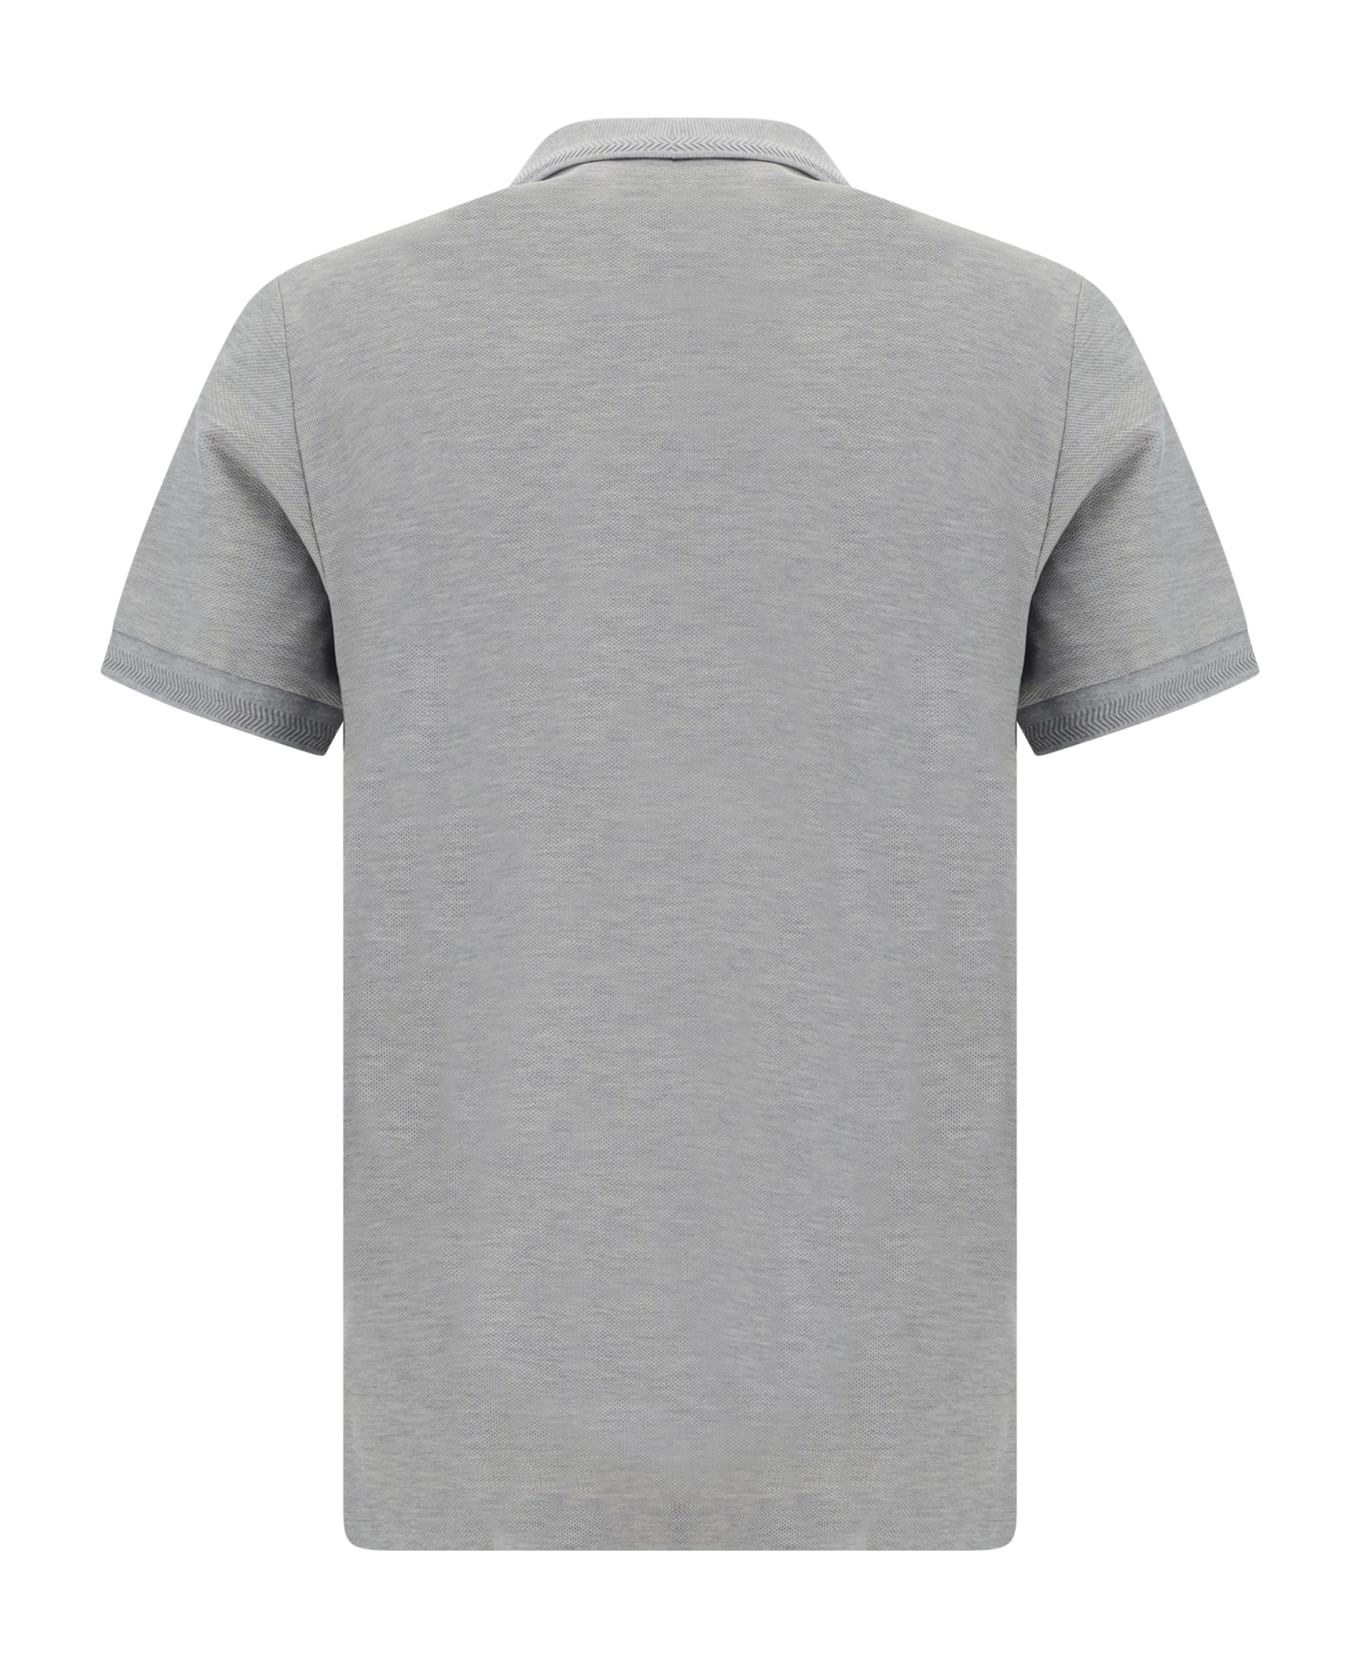 Burberry Eddie Polo Shirt - Pale Grey Melange